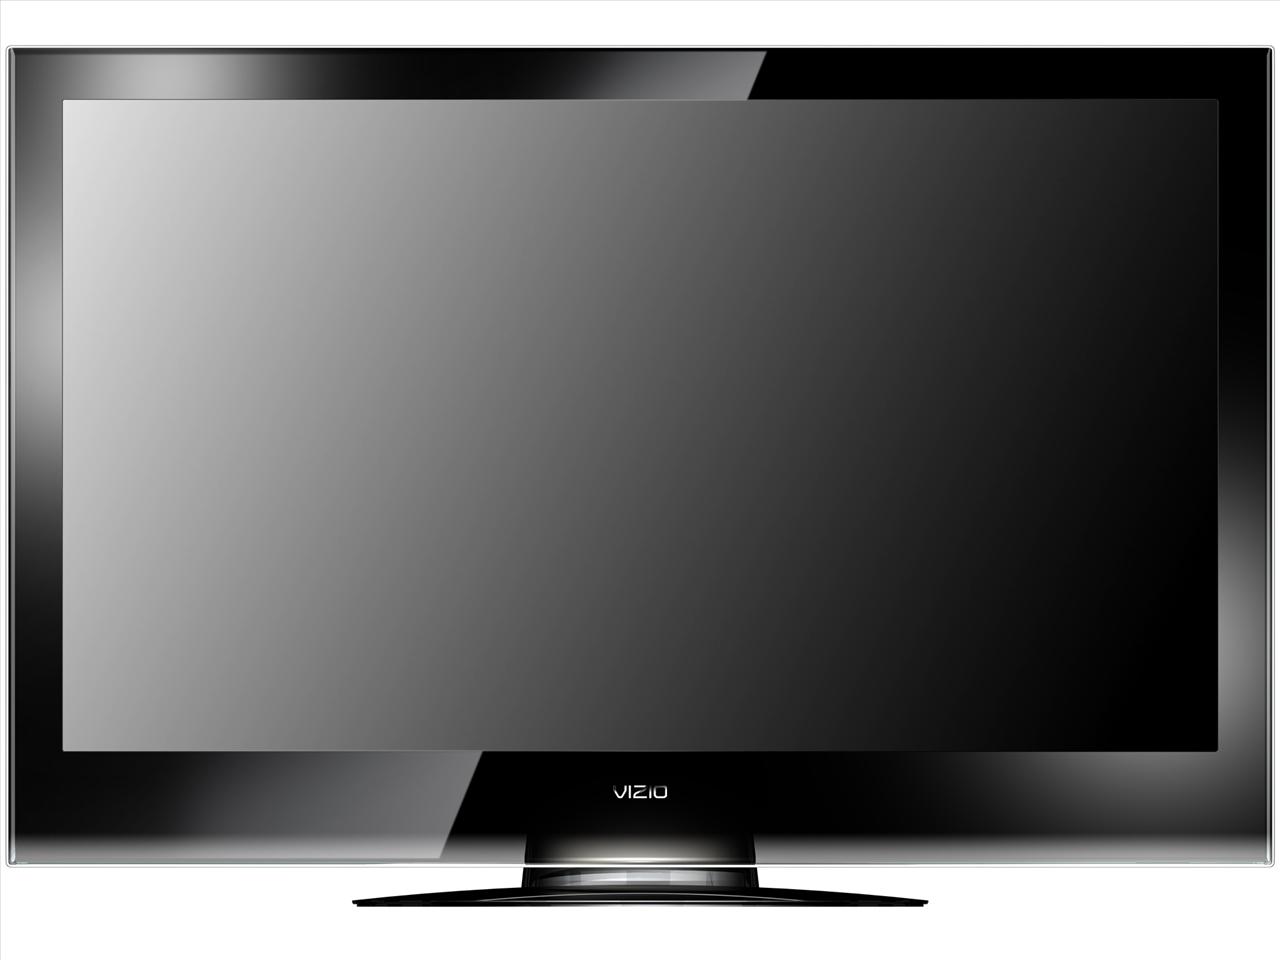 Старые жк телевизоры. ЖК телевизор сони 42 2010 модель. Телевизор LG Plazma 2010 года. Телевизор Панасоник 2010 года. Телевизор LG 72 дюйма.